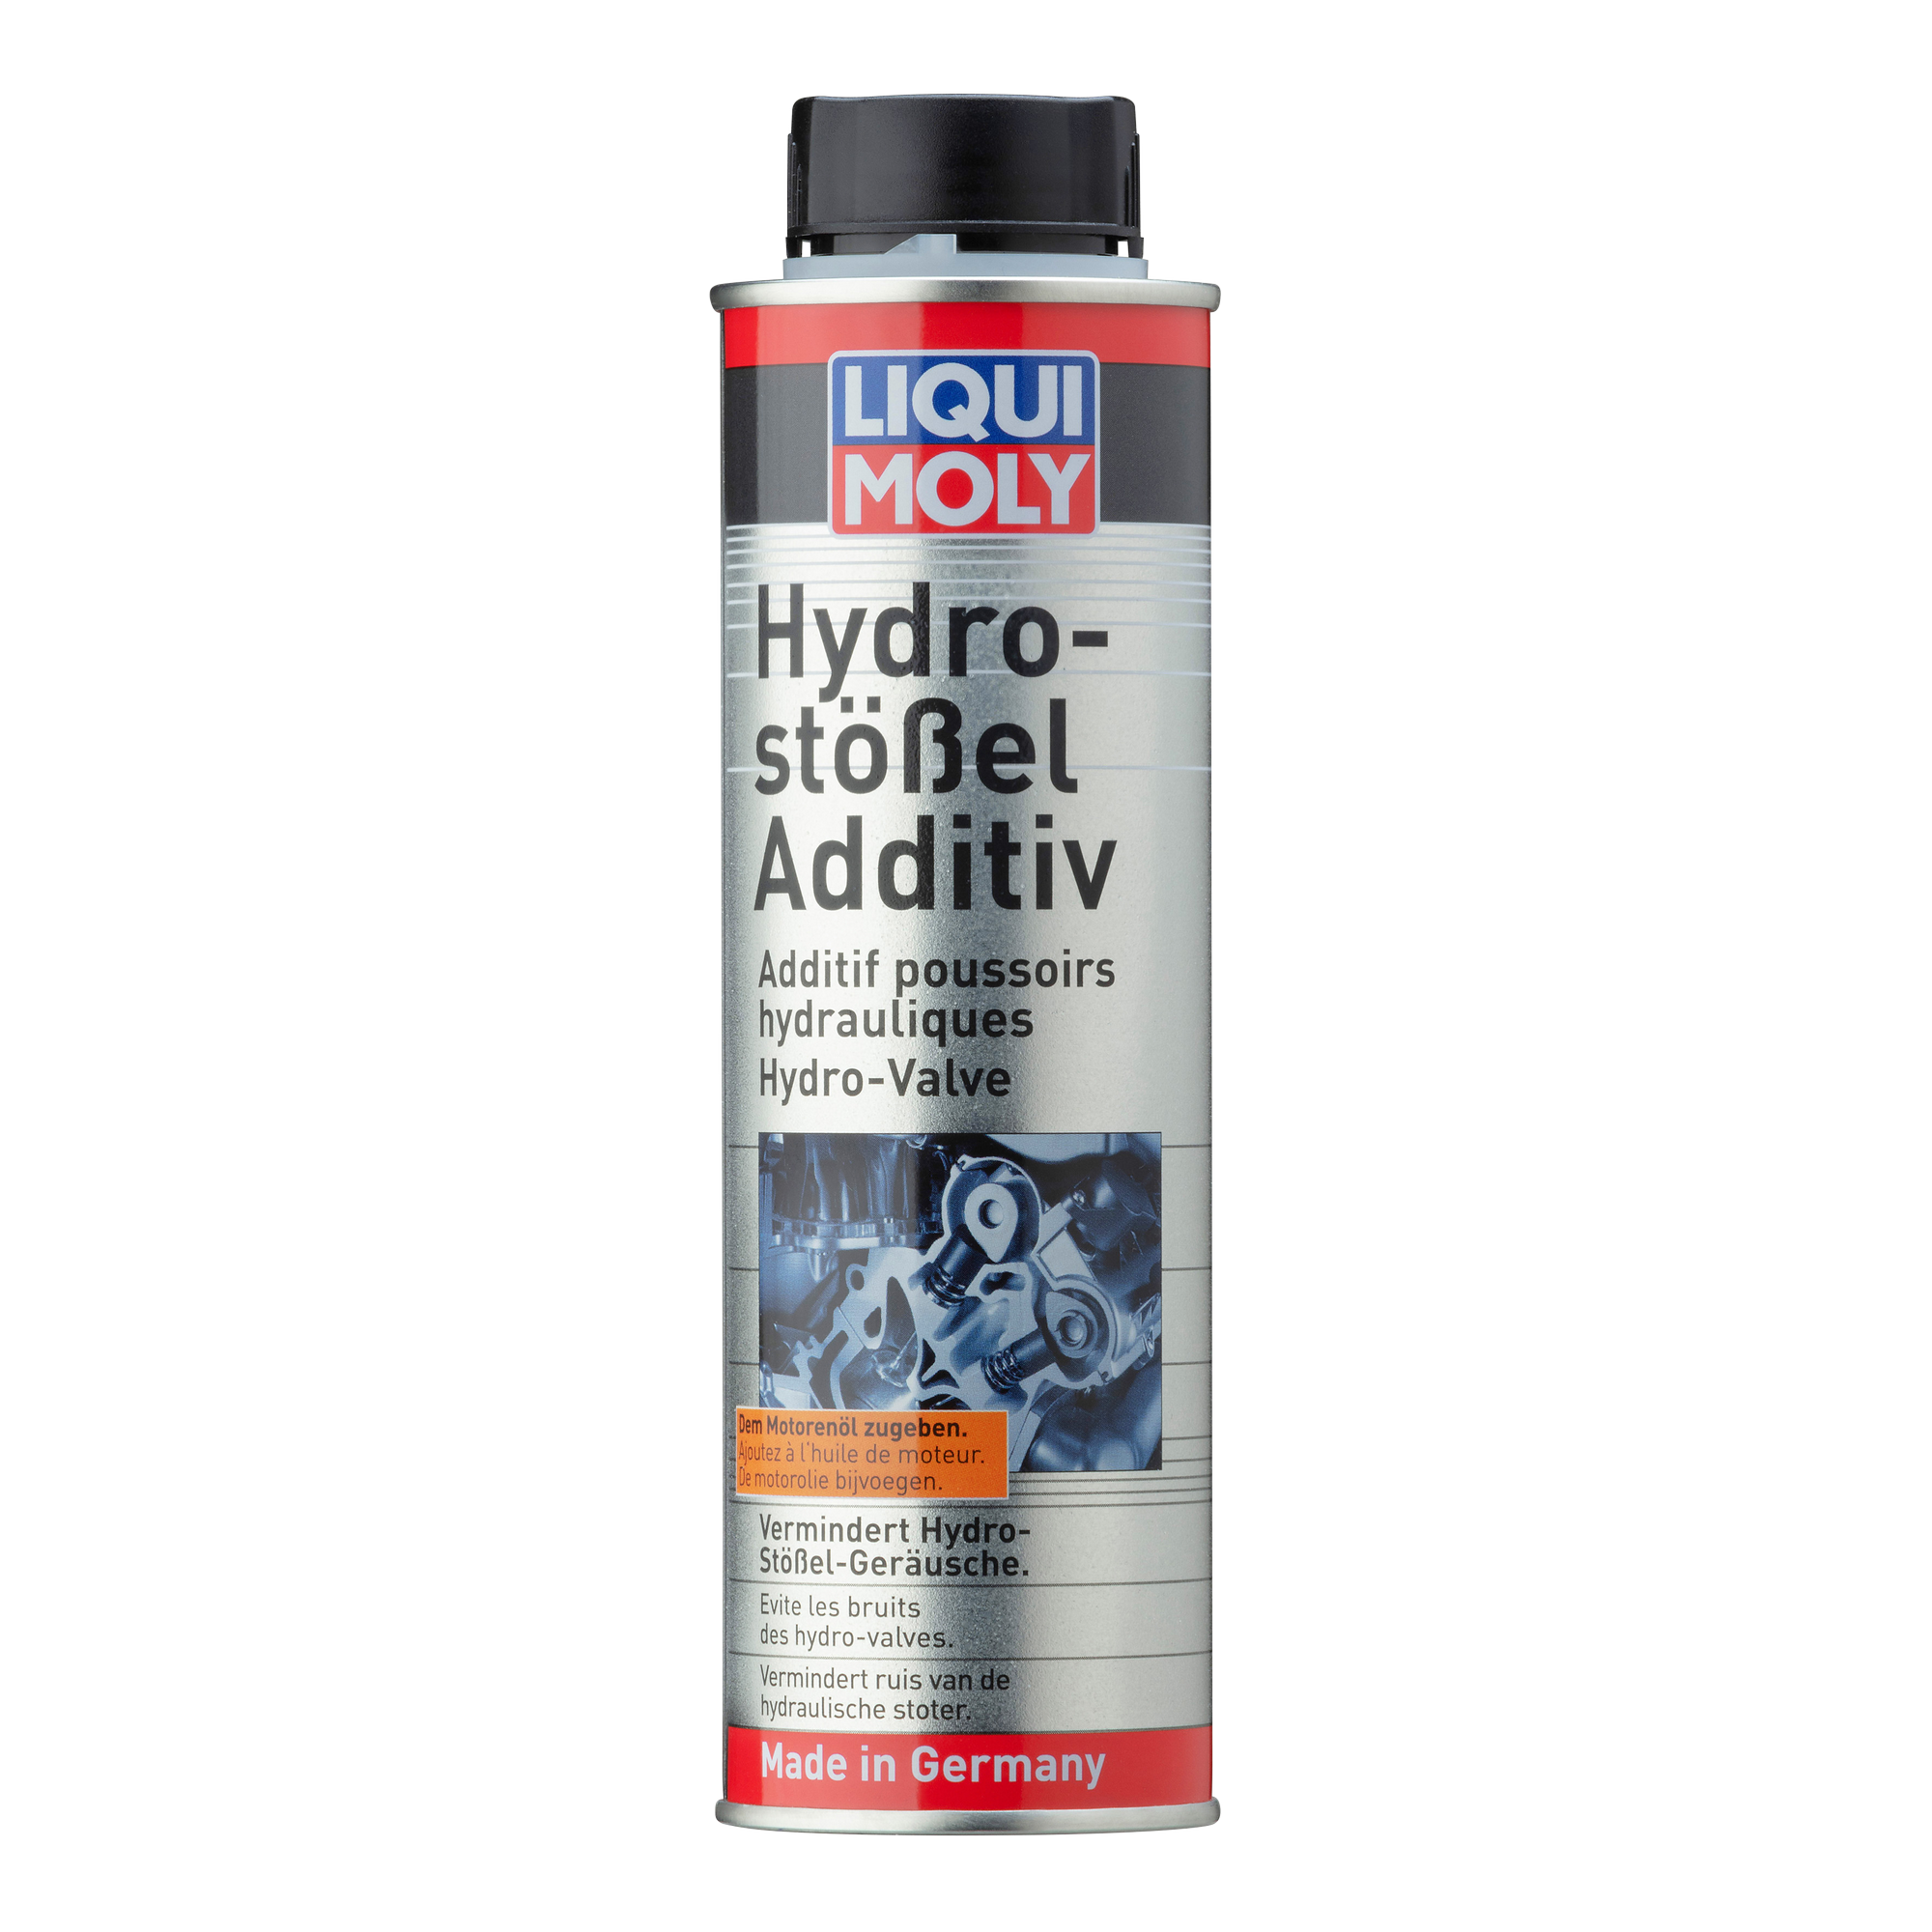 Hydro-Stößel-Additiv 300 ml + product picture